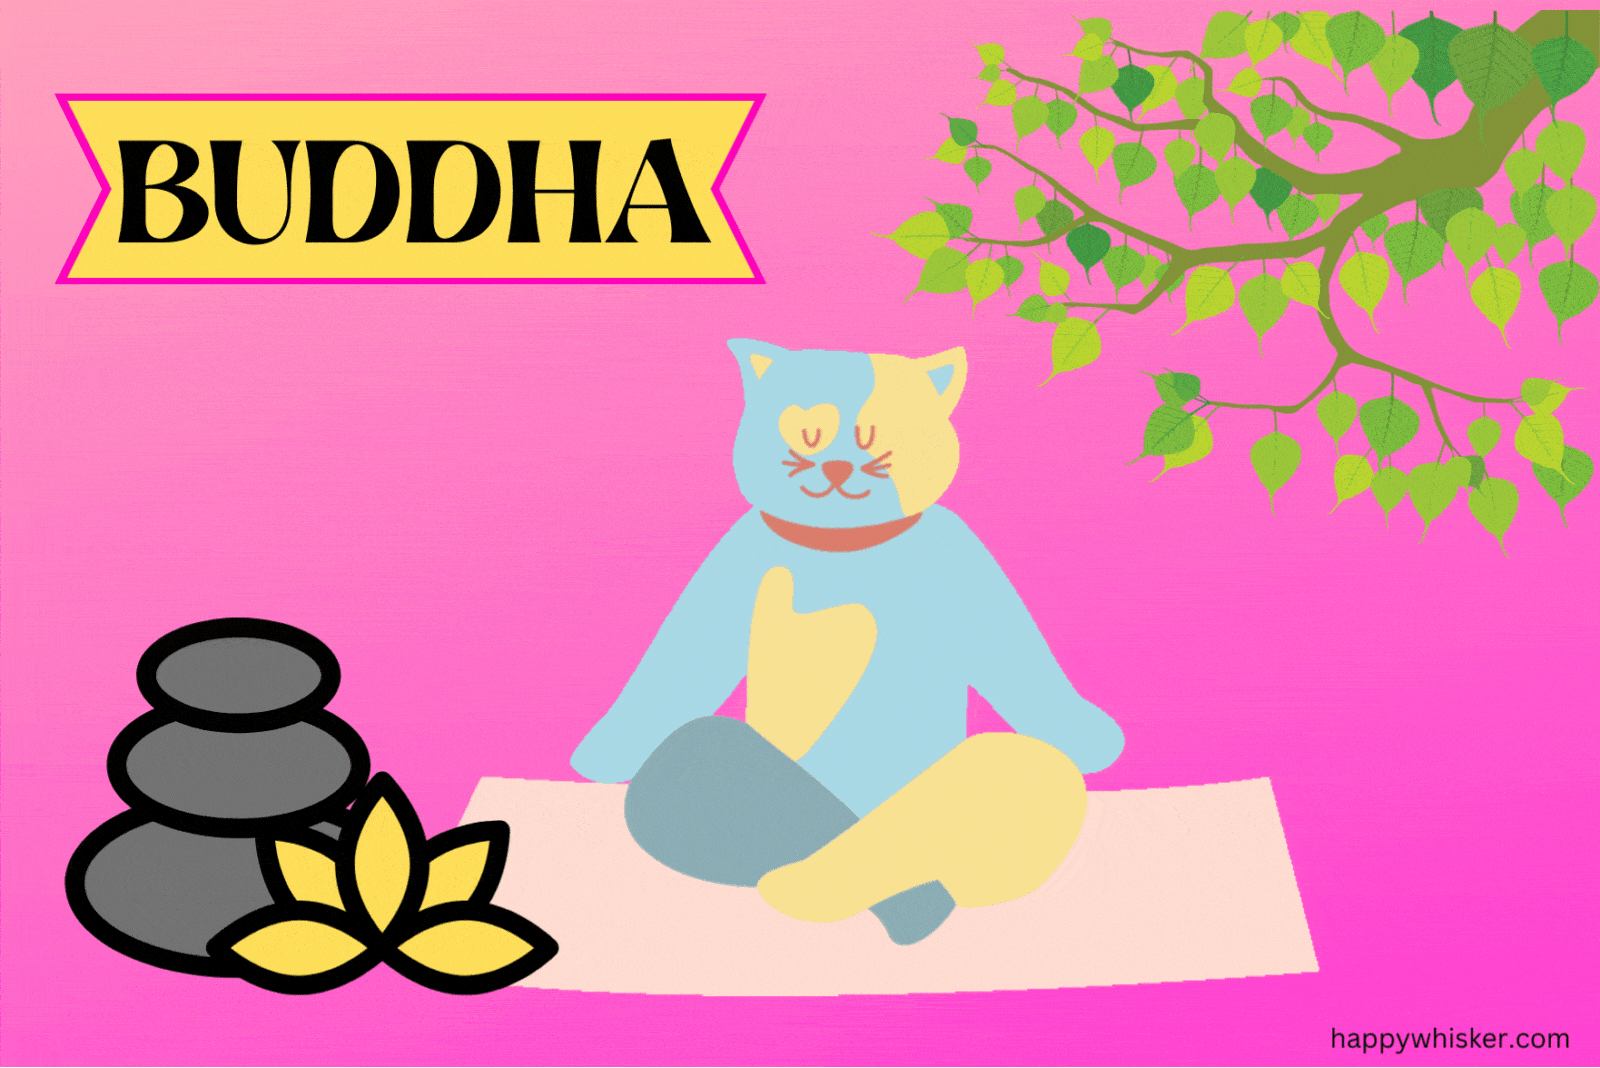 Buddha name and cat meditating